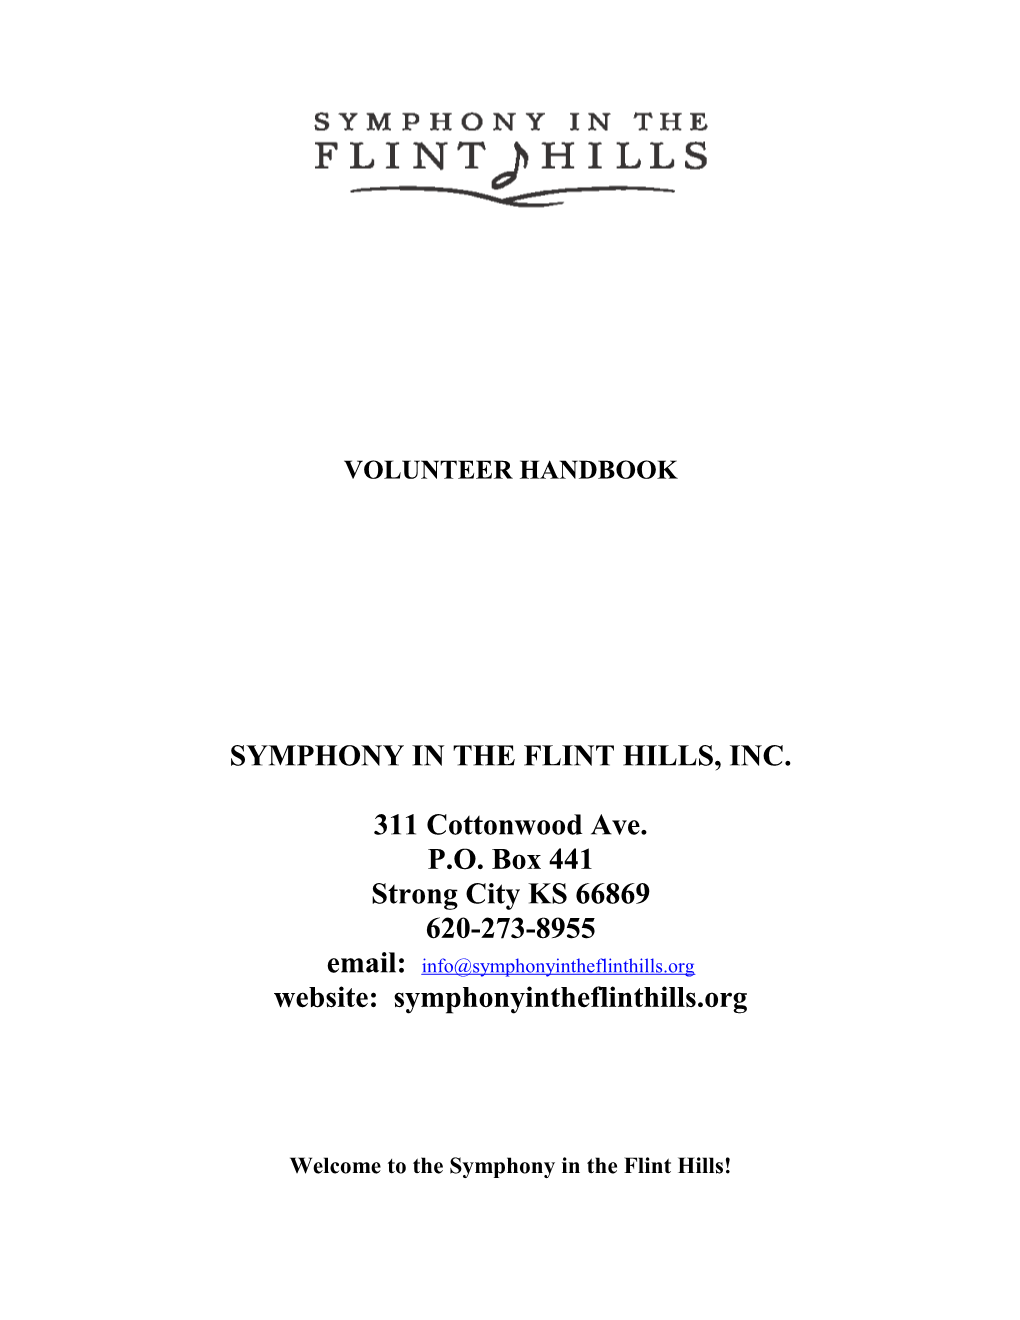 Symphony in the Flint Hills, Inc